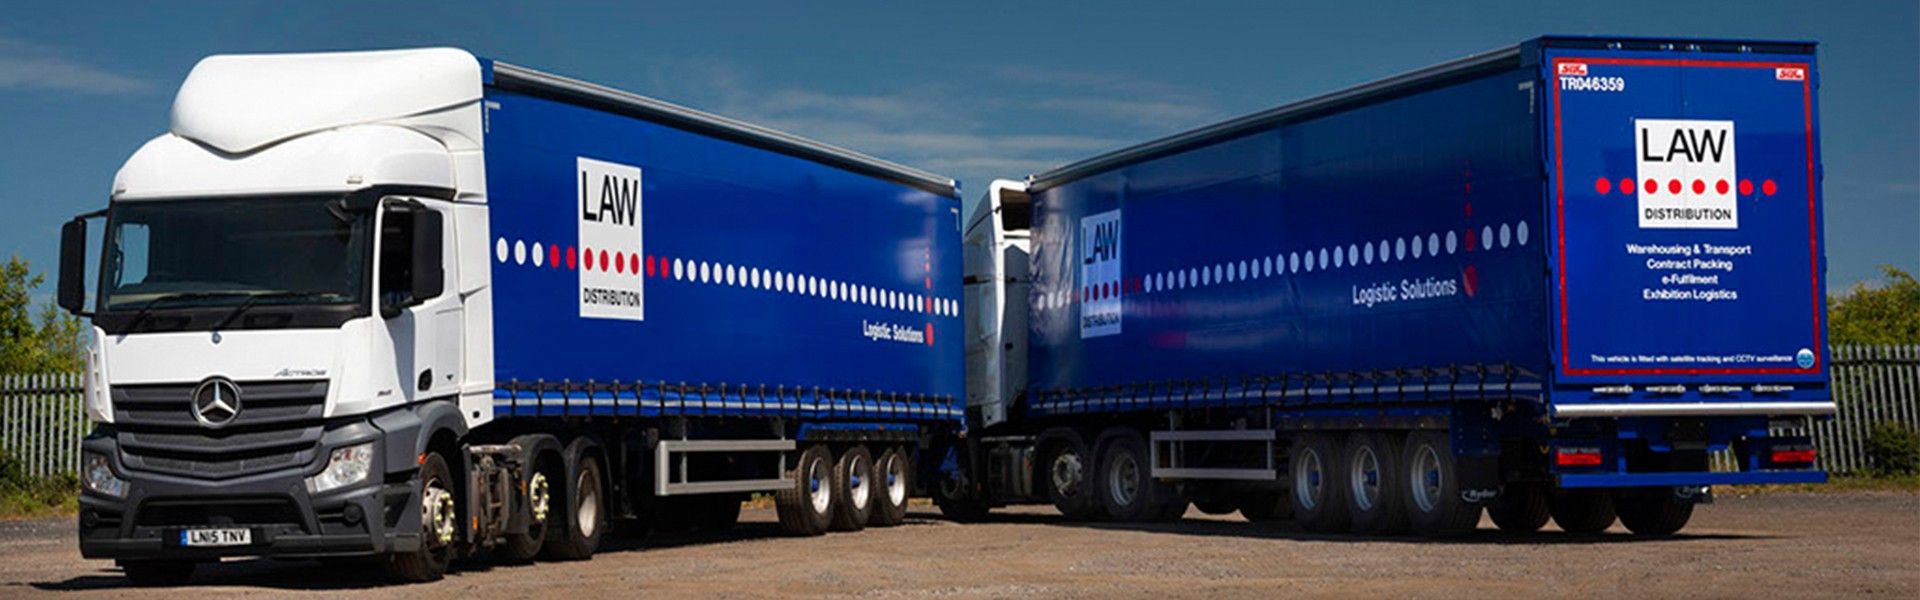 2 Law Distribution Trucks